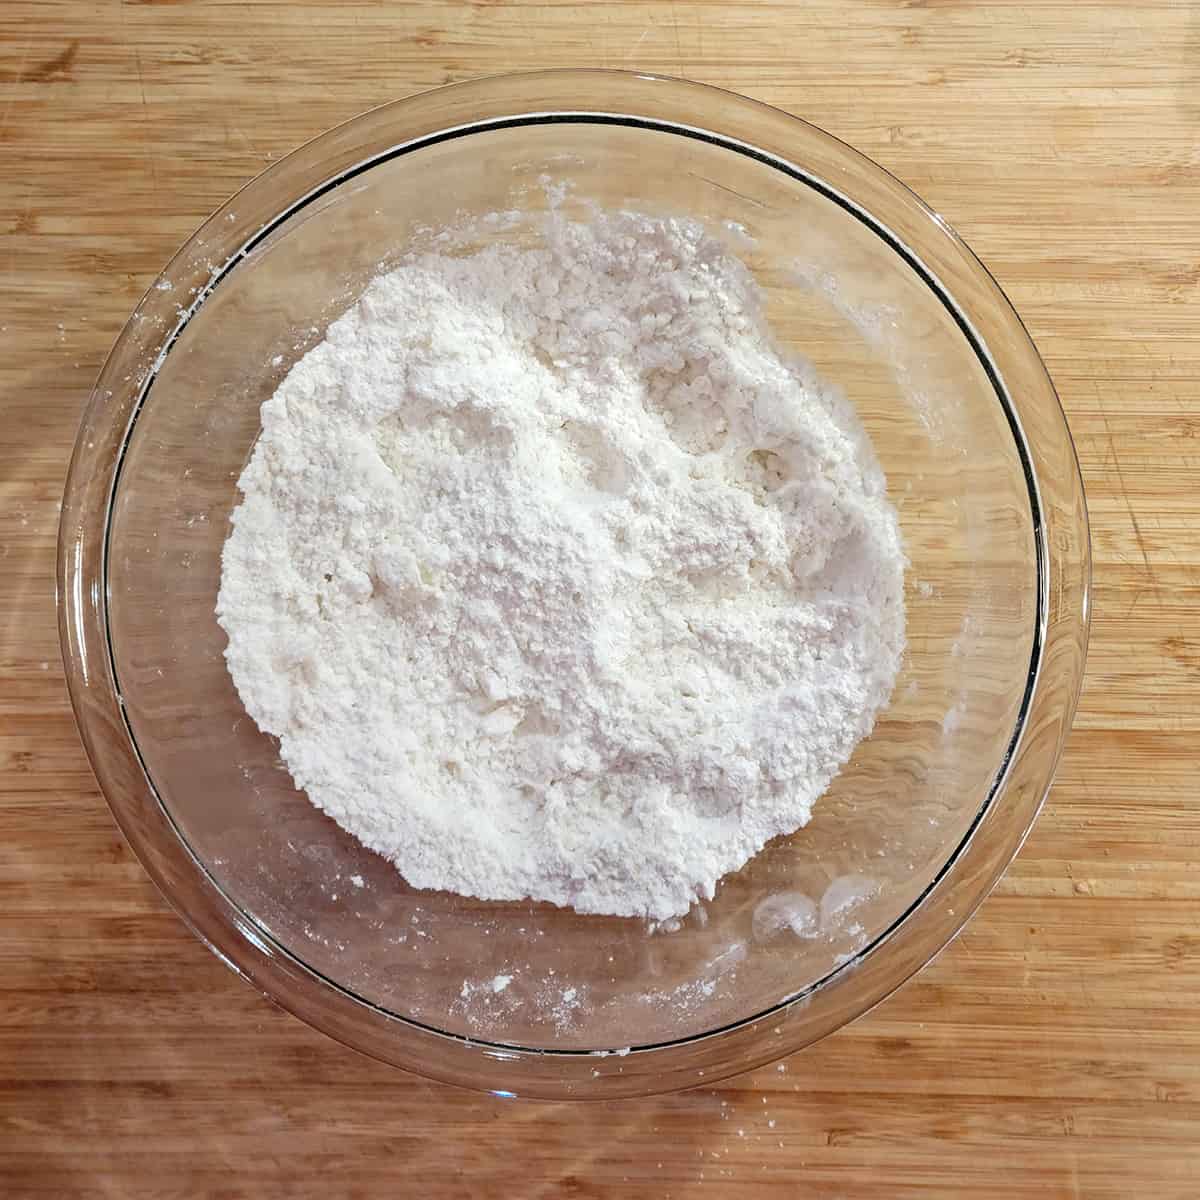 Butter cut into the flour.